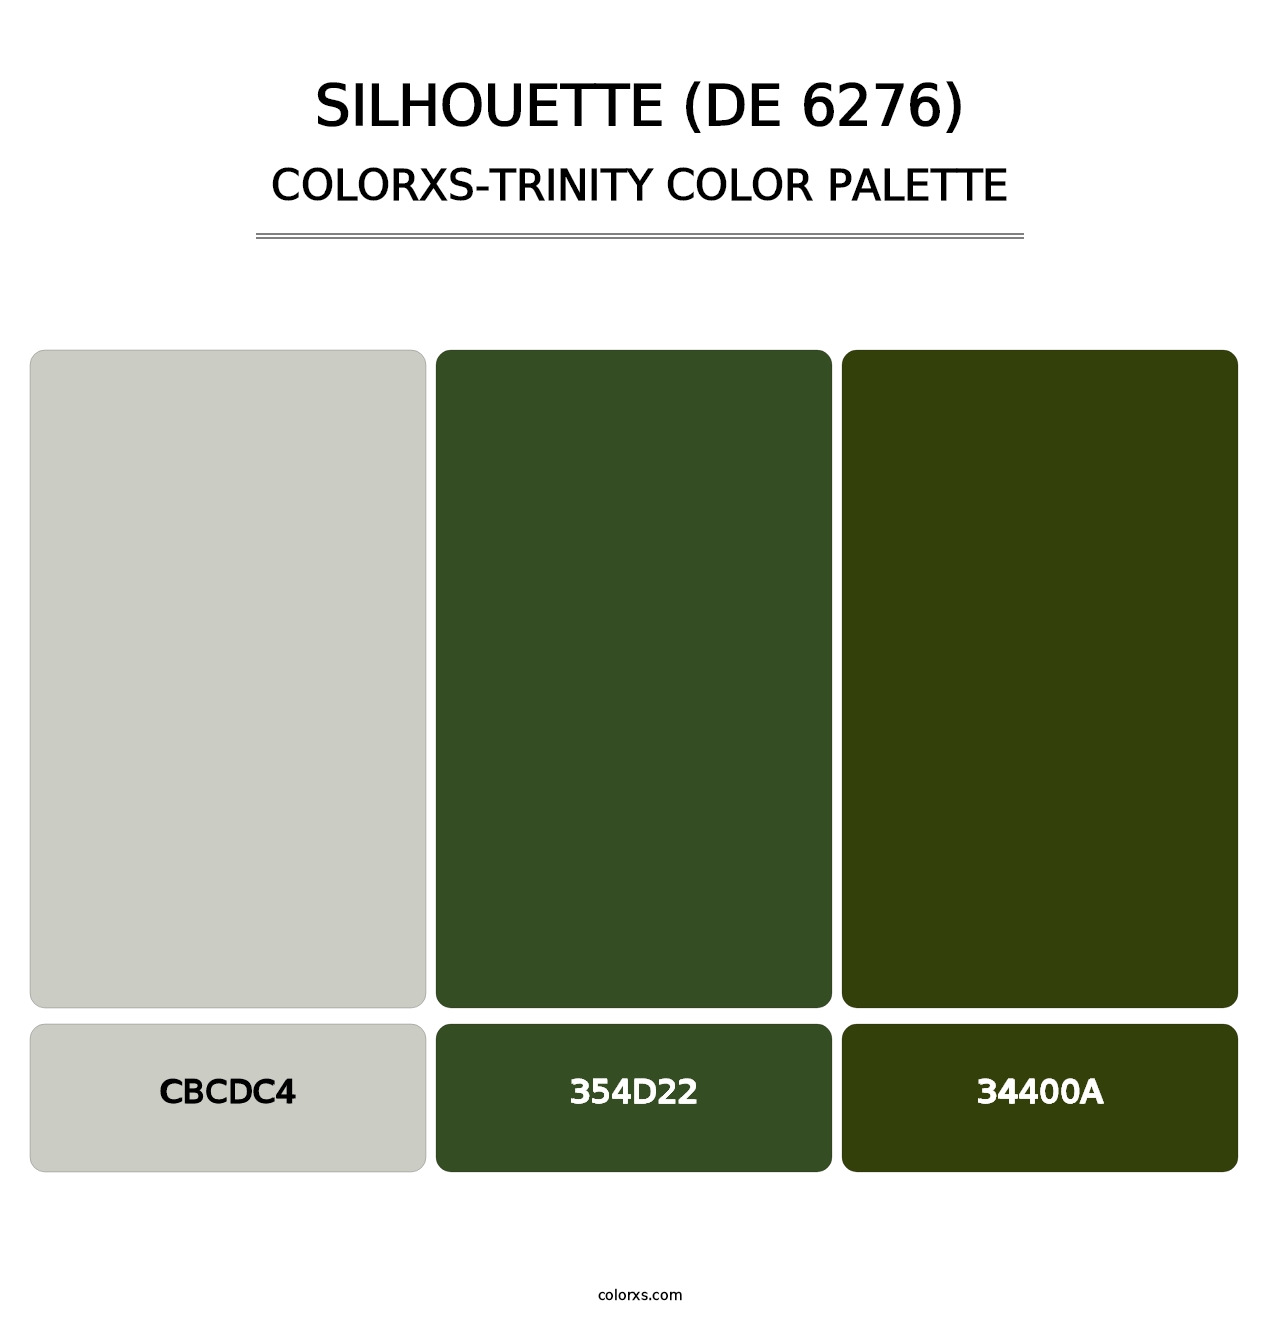 Silhouette (DE 6276) - Colorxs Trinity Palette